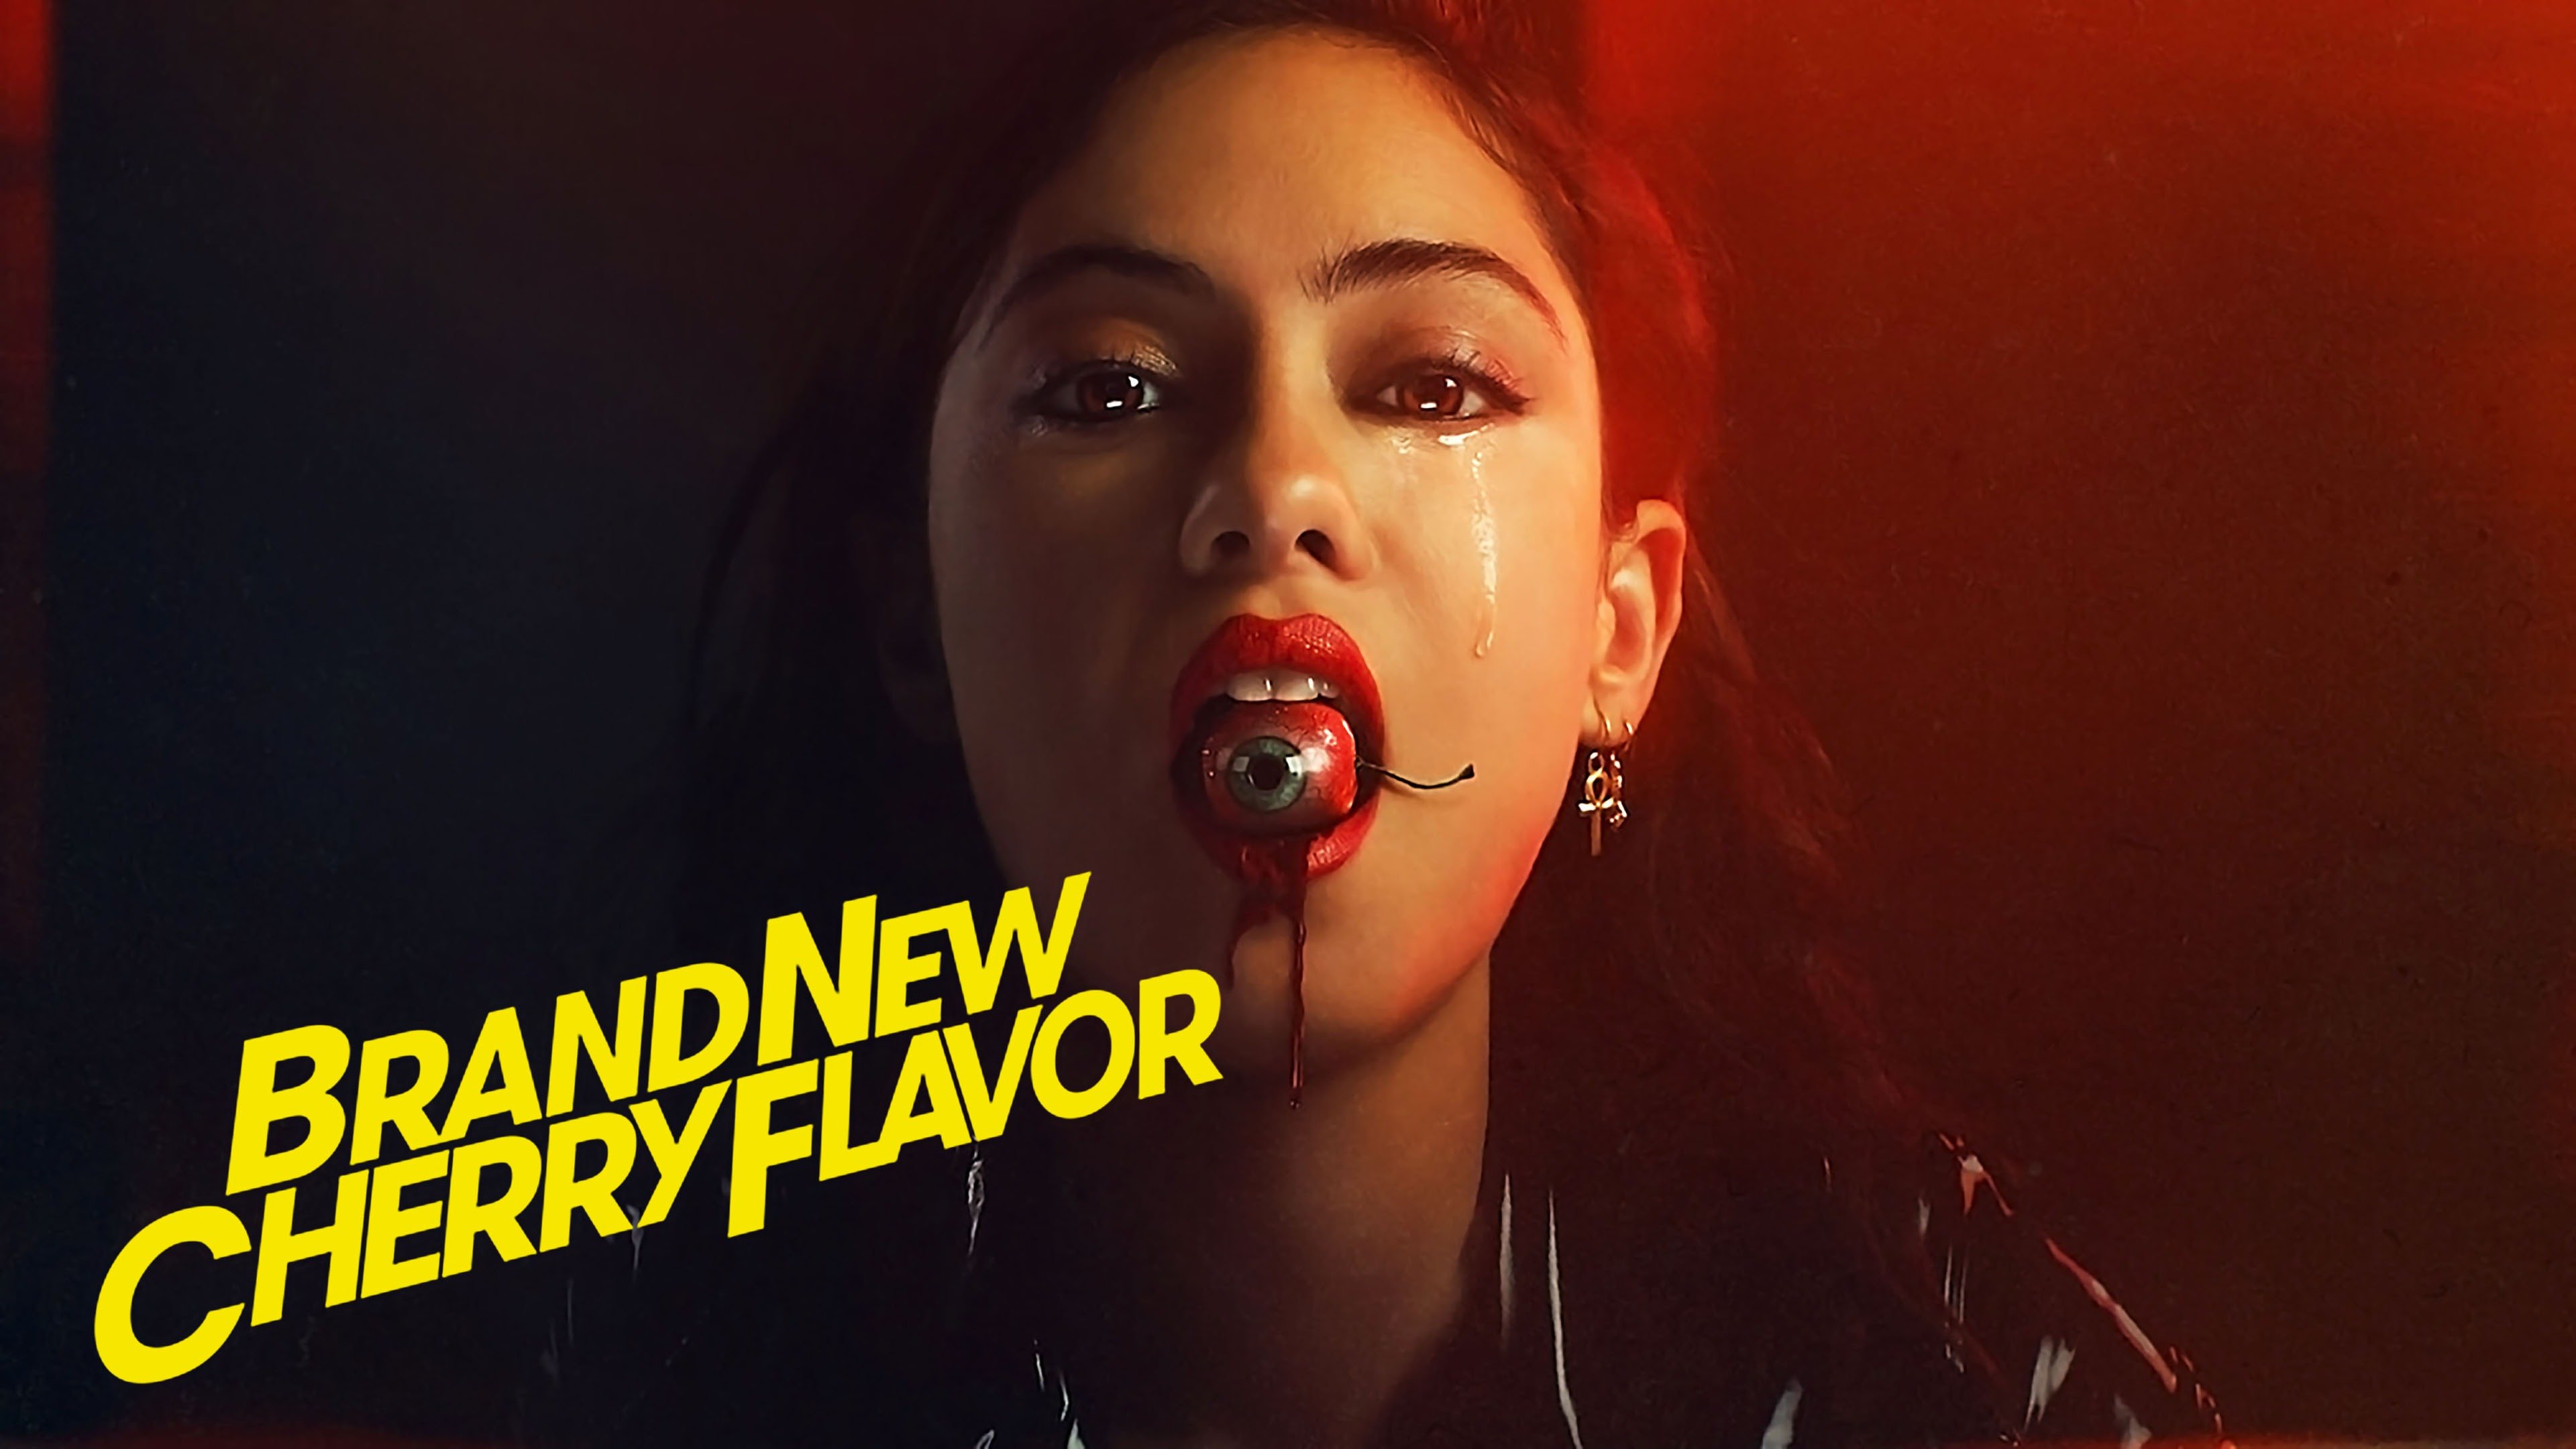 "Brand New Cherry Flavor: Season 1 photo 3"